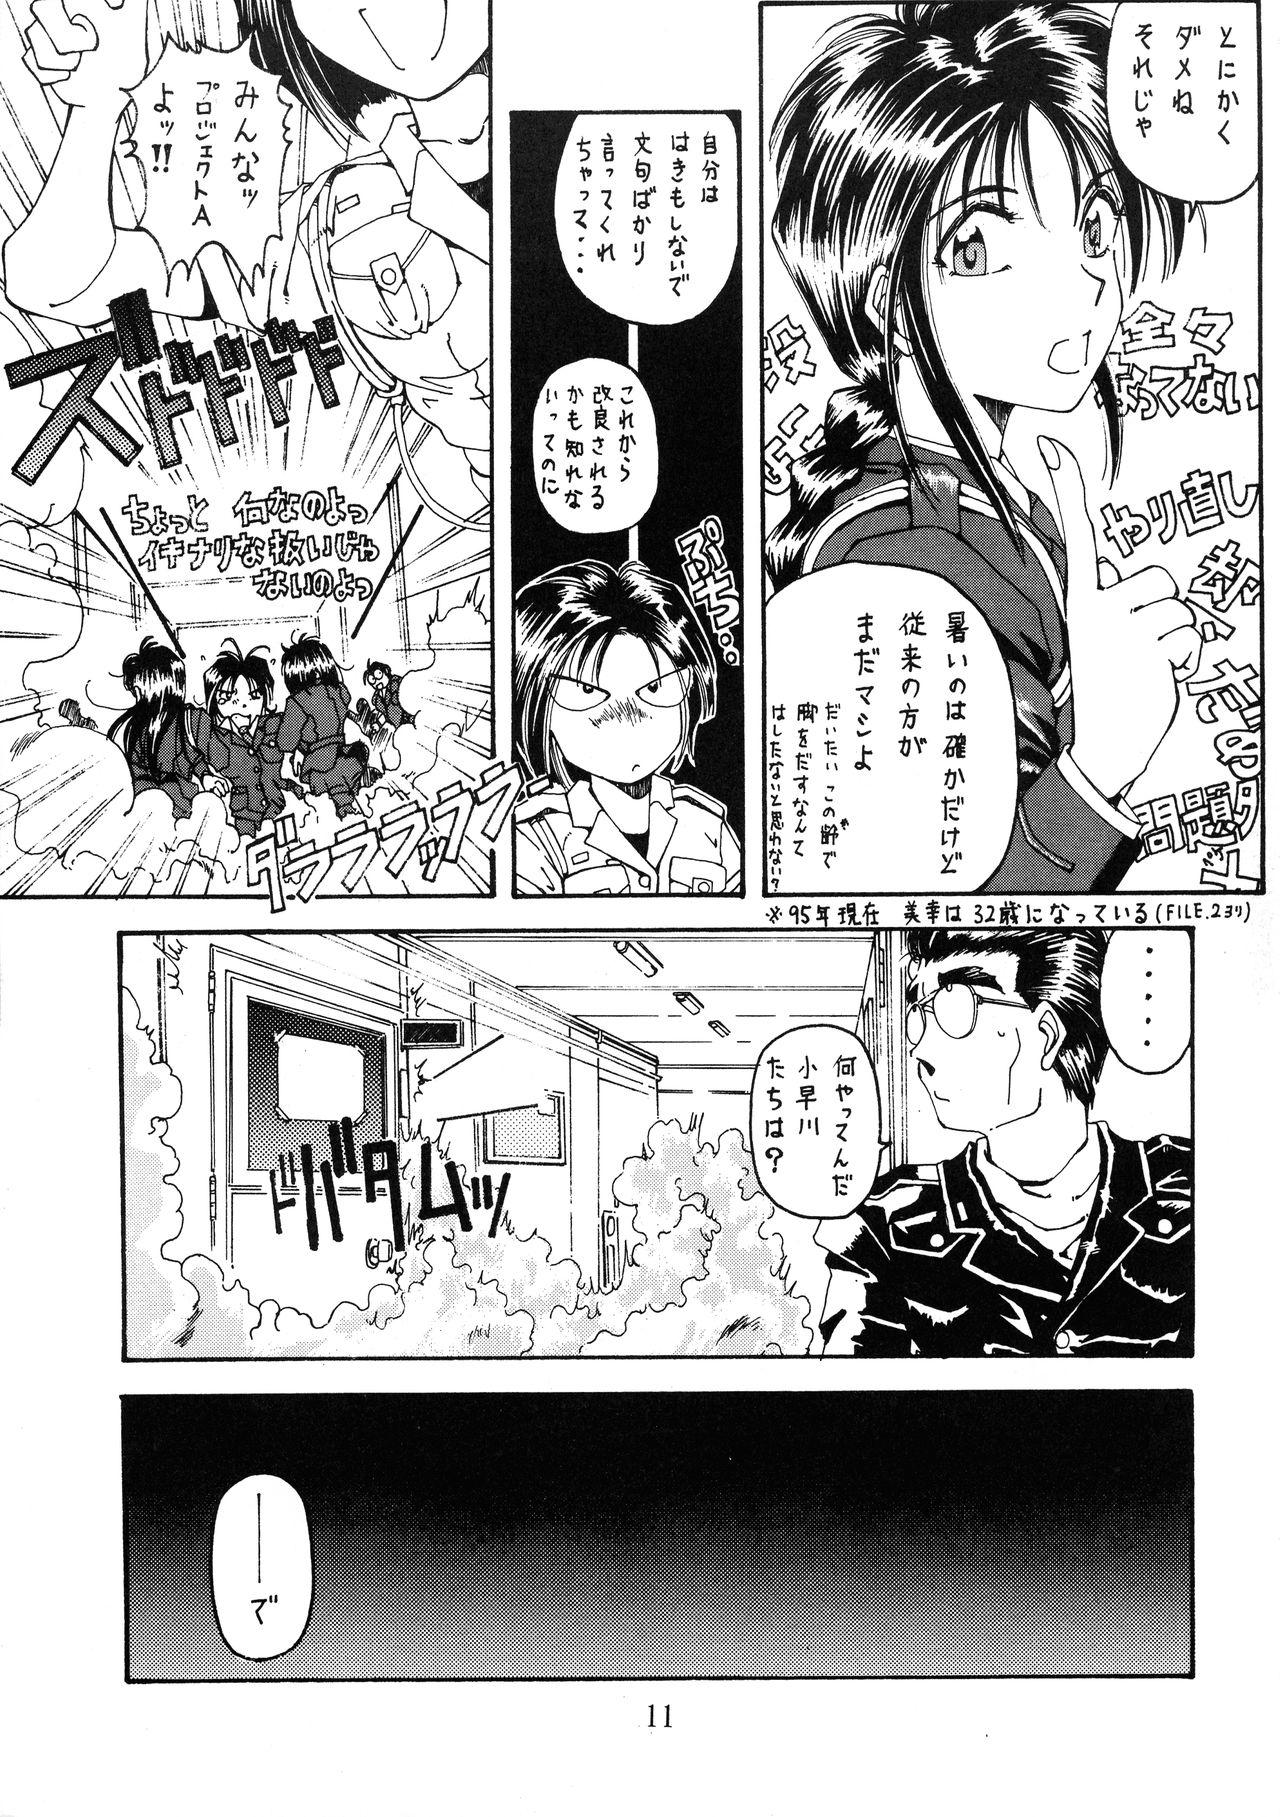 Cdmx Goku tamashi Young - Page 11